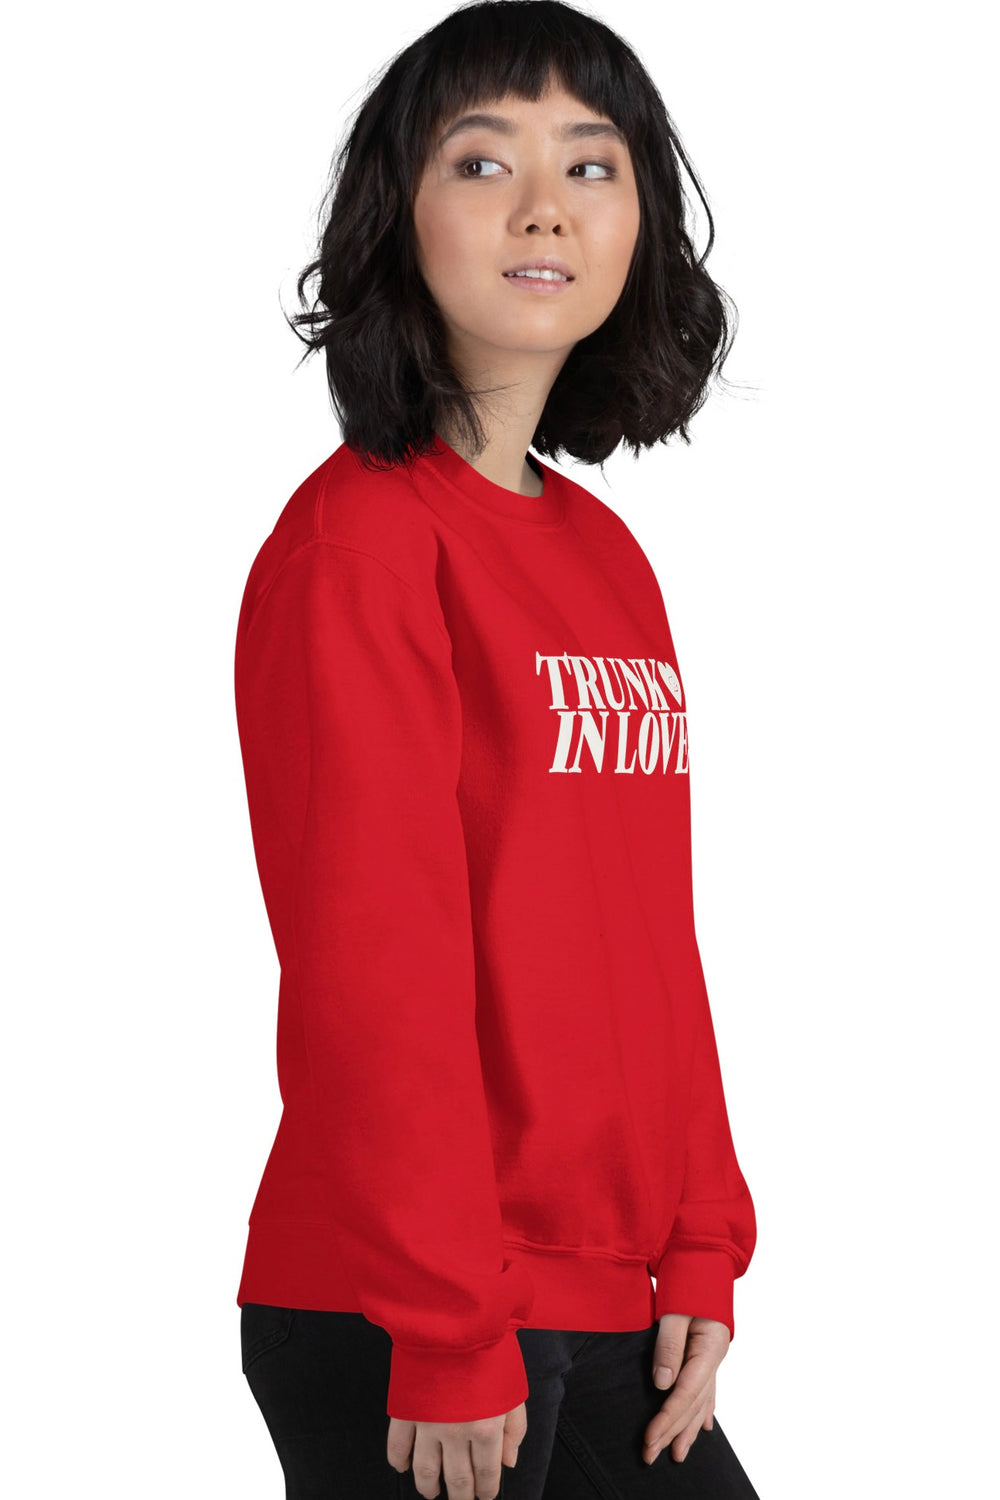 Trunk in Love Unisex Sweatshirt